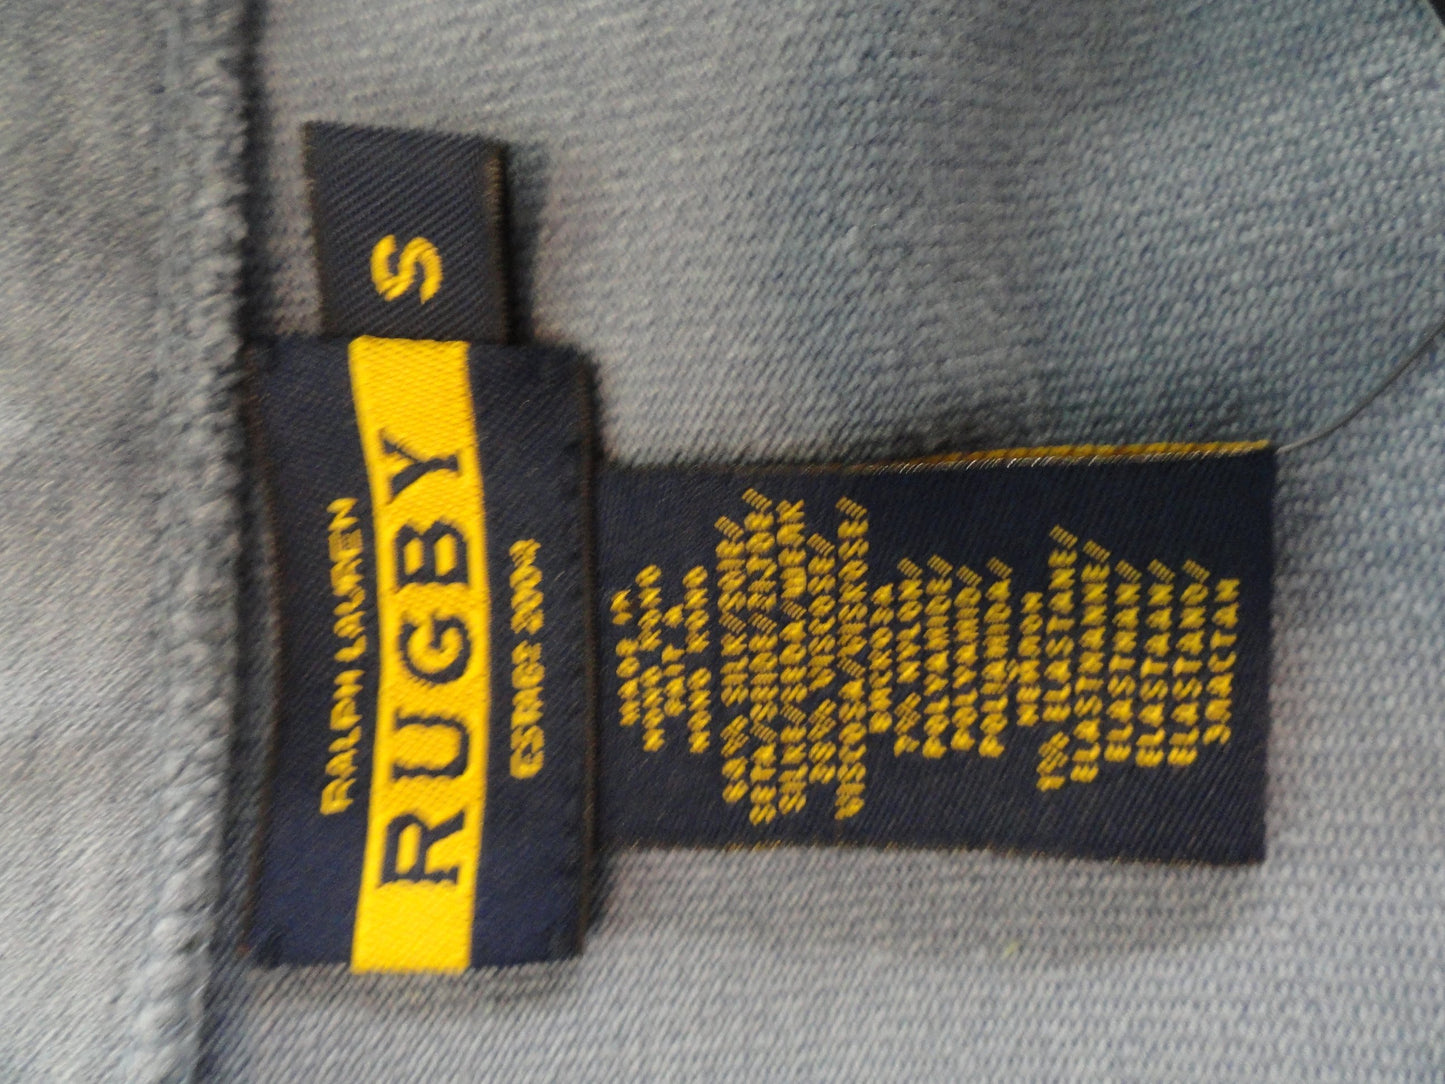 Ralph Lauren Rugby 60's Skirt Size S SKU 000233